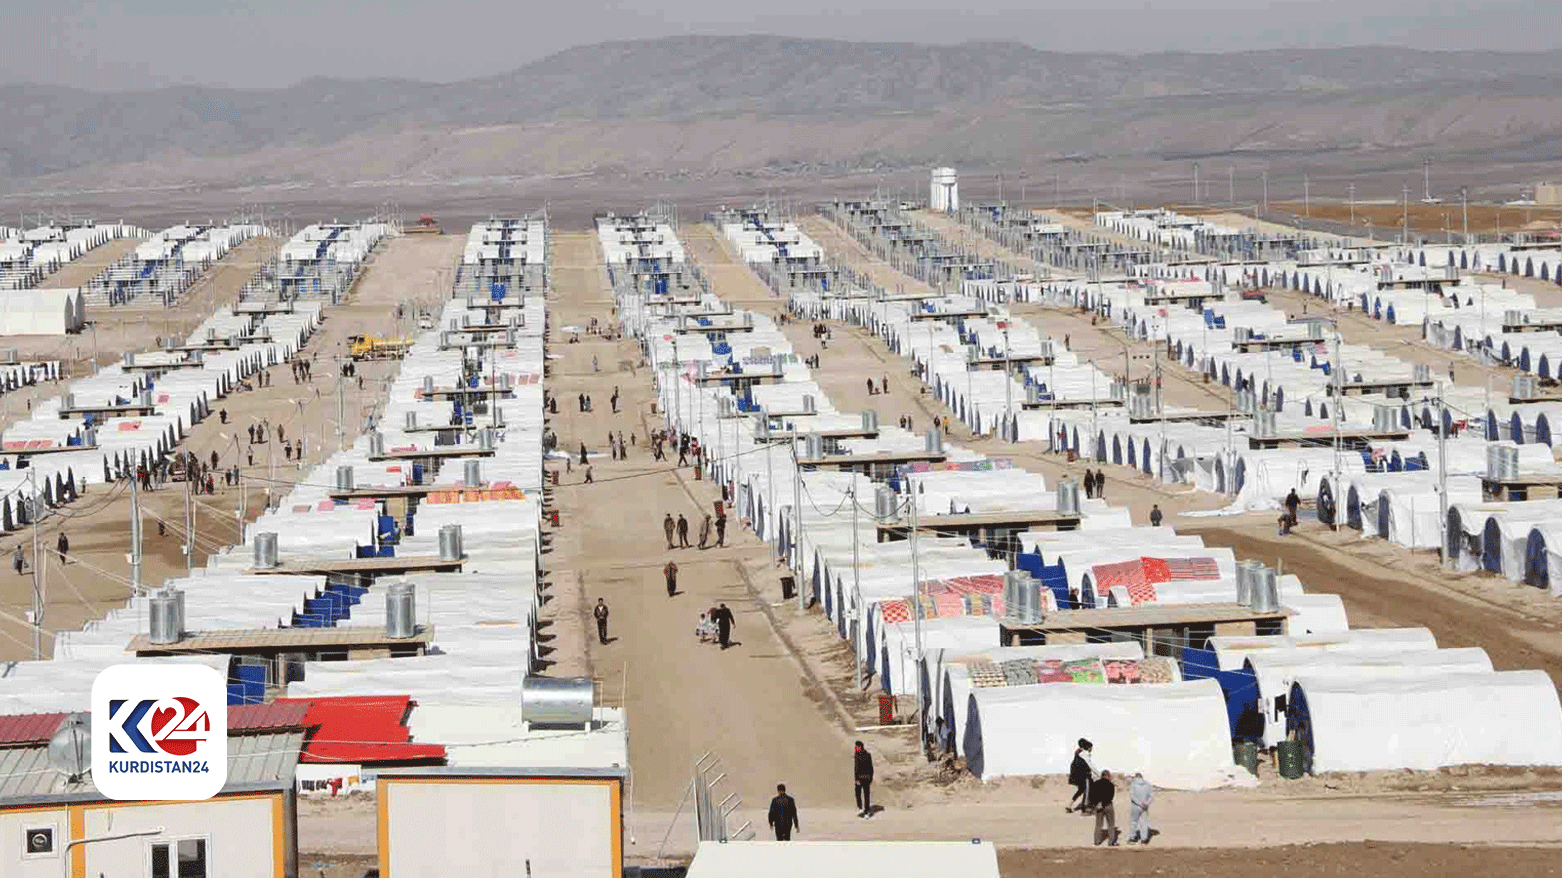 A refugee camp in the Kurdistan Region. (Photo: Kurdistan24)